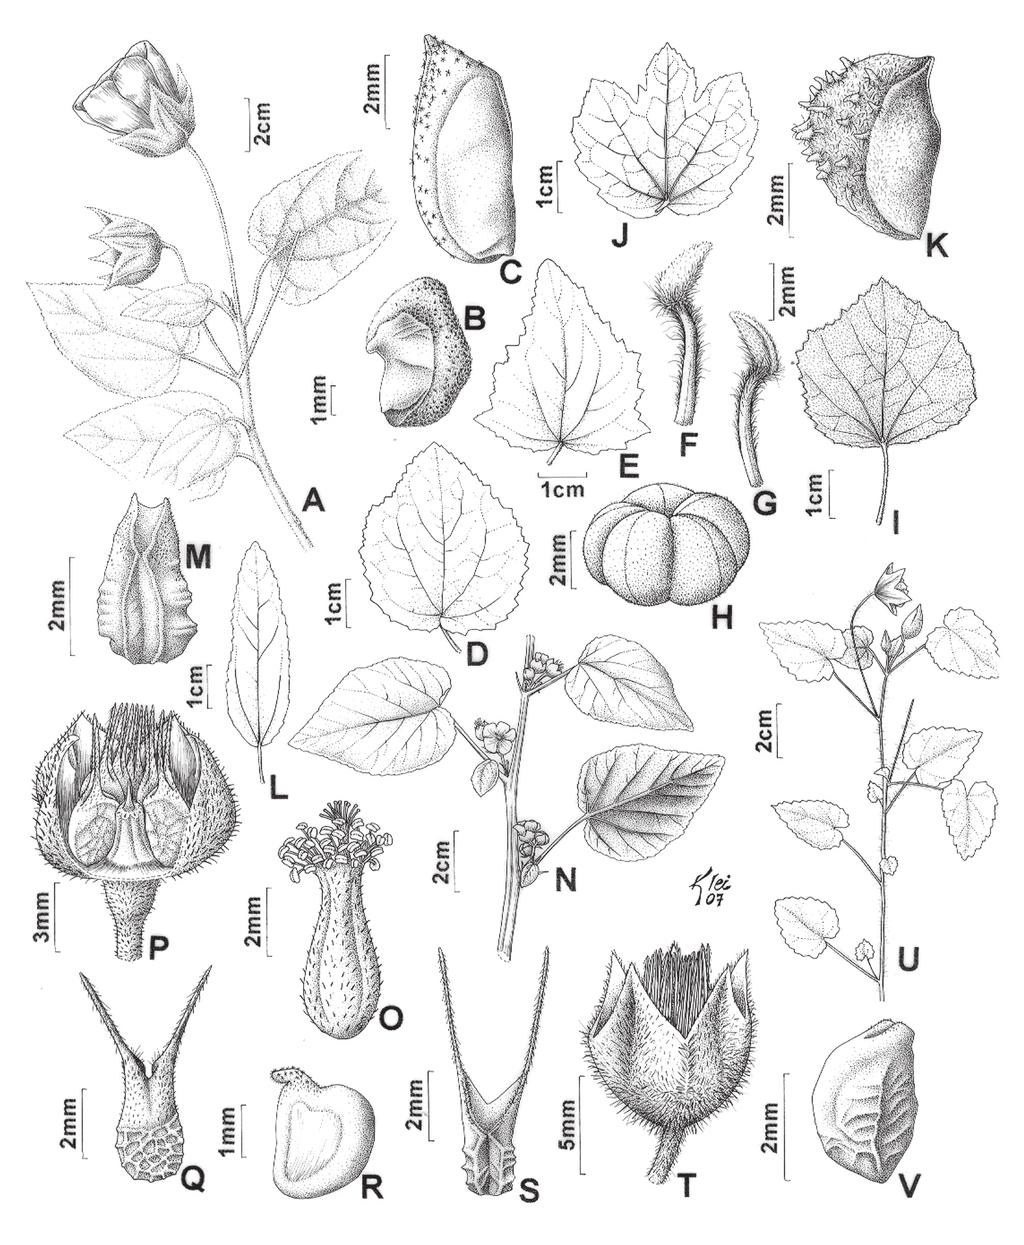 66 G. L. Esteves & A. Krapovickas Fig. 1. MALVACEAE. A-B. Abutilon monteiroi: A. Ramo com flores. B. Mericarpo, vista lateral. C. A. ramiflorum: Mericarpo, vista látero-dorsal. D-H.